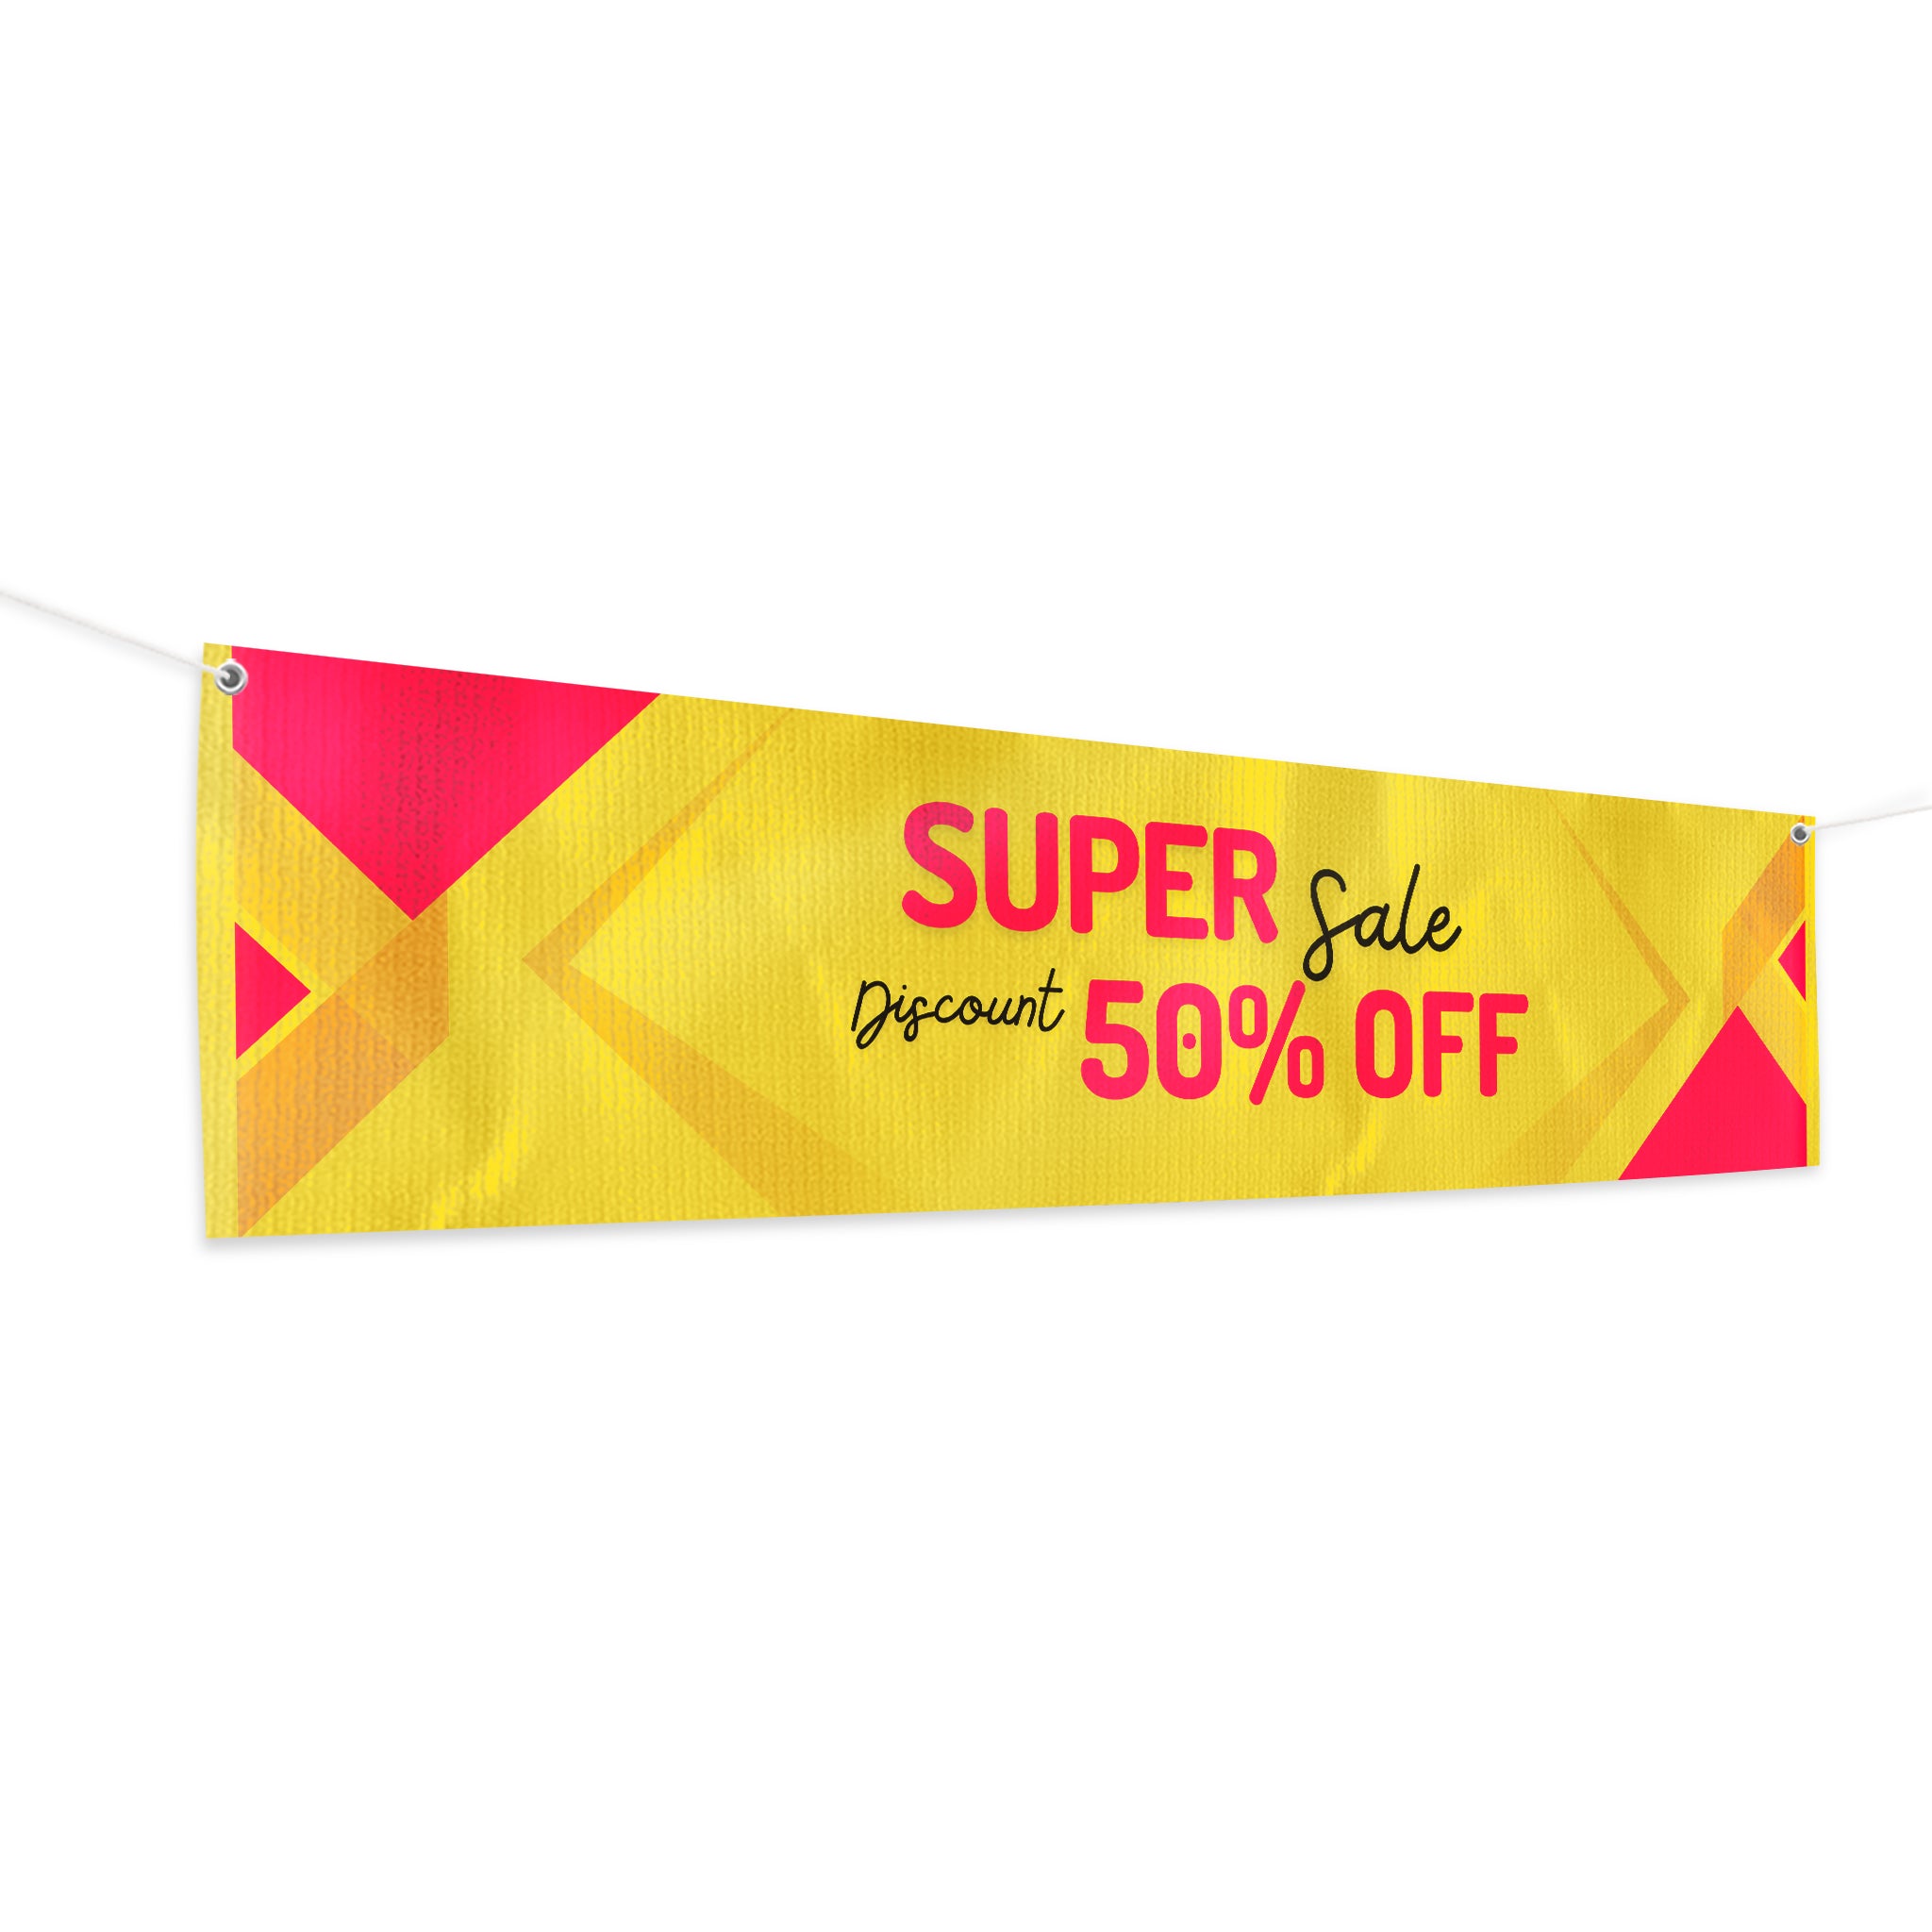 Super Sale Discount 50% Off Large Banner